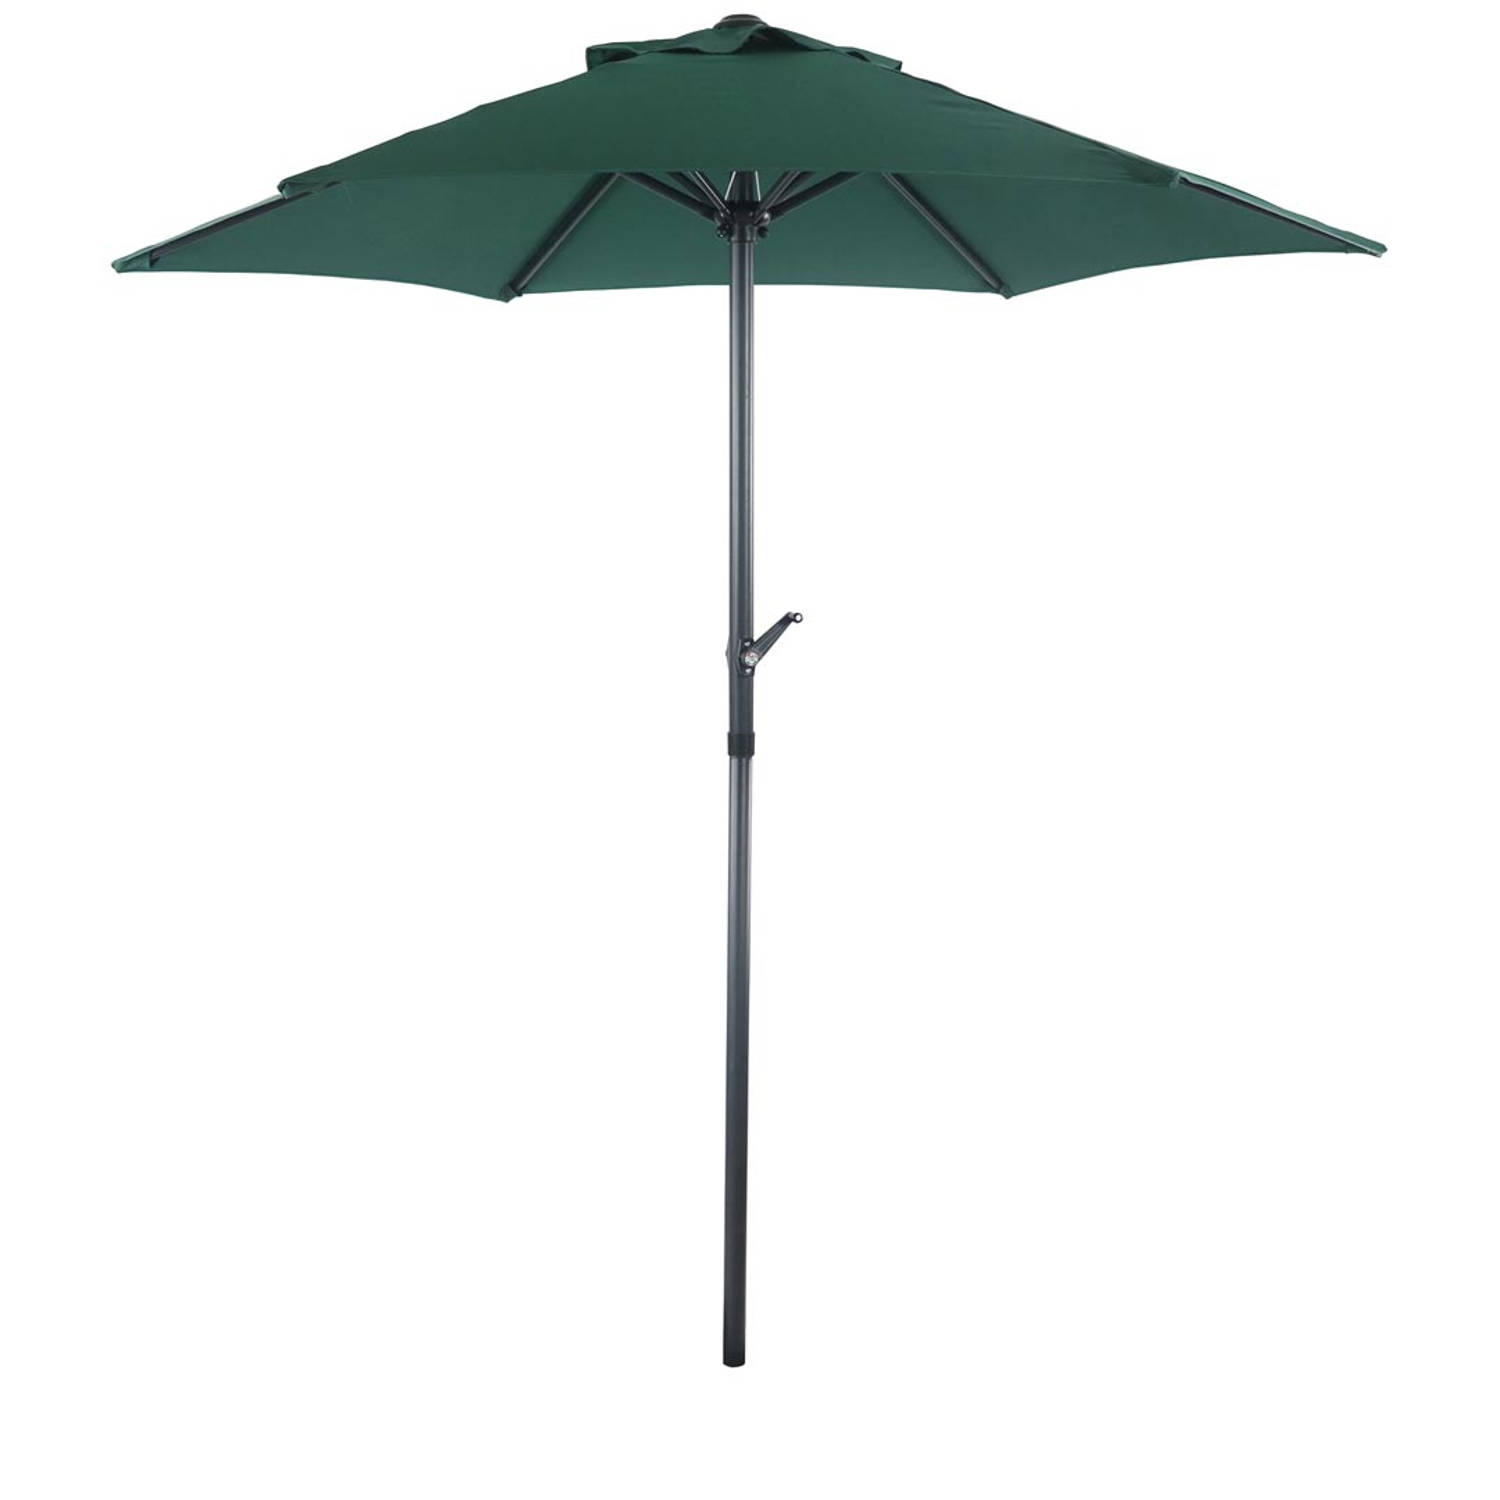 Vera parasol Ø180cm groen.